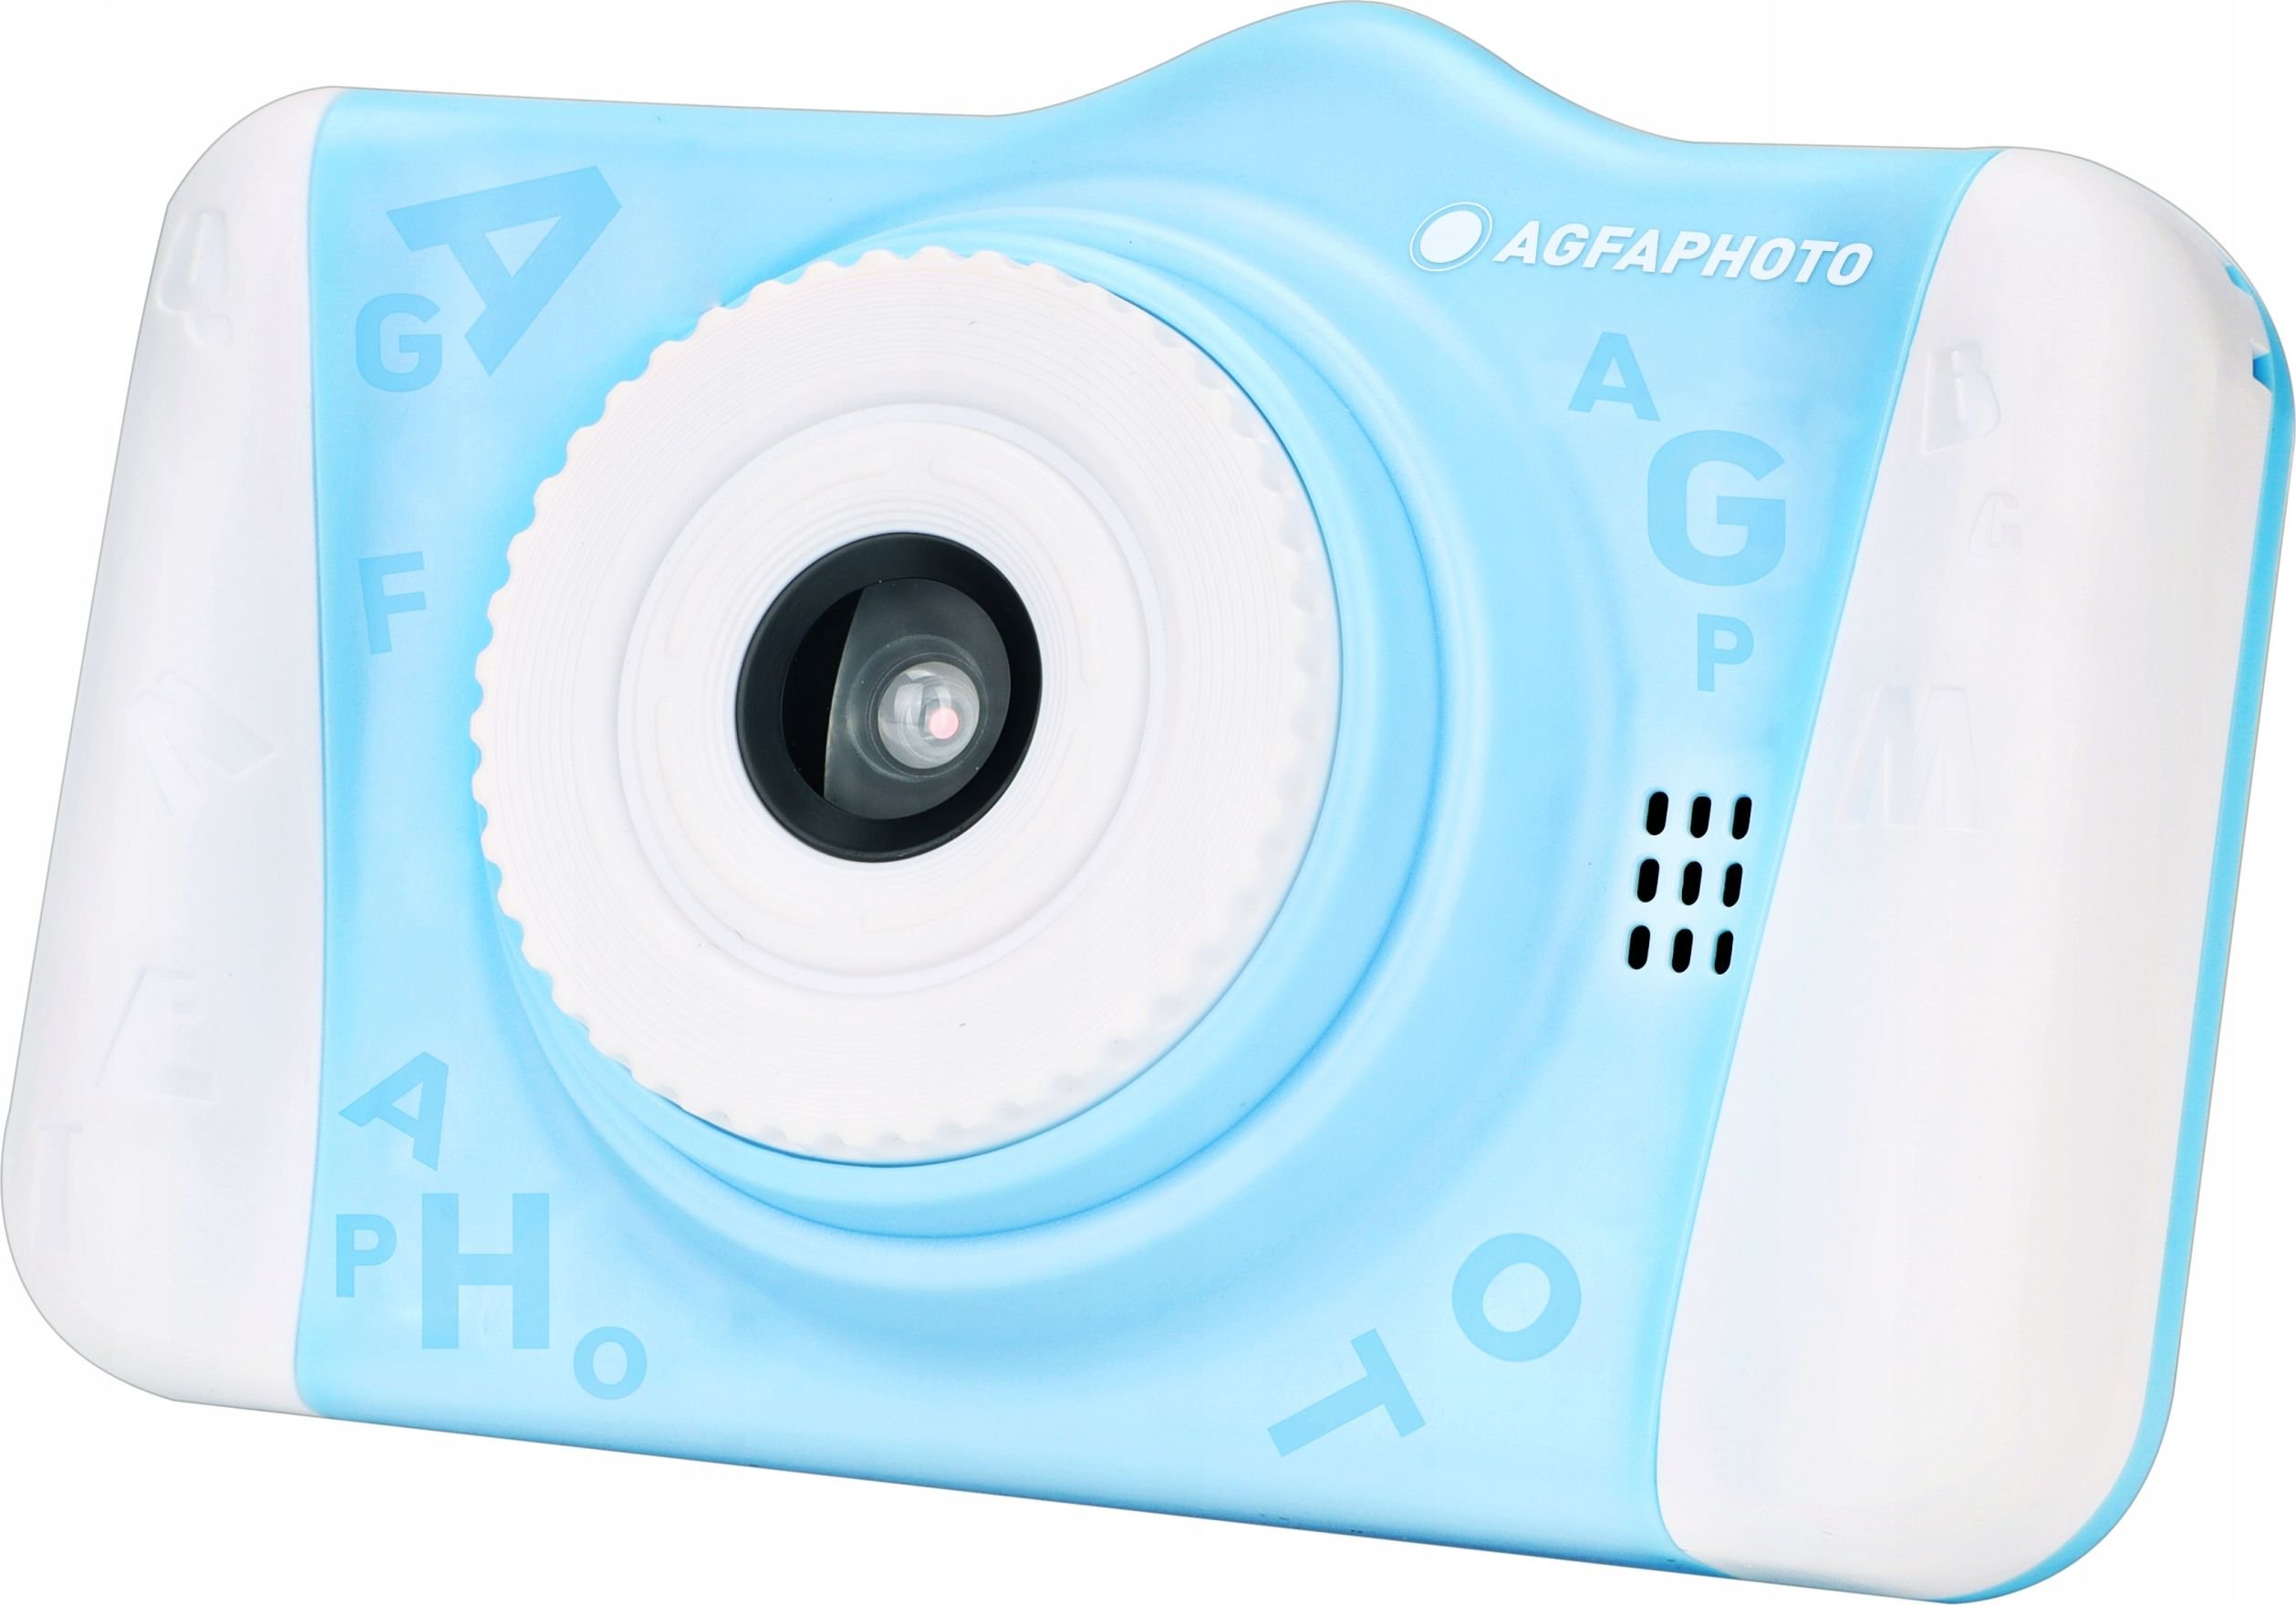 Aparate foto compacte - Aparat foto digital compact cu o camera video pentru copii Agfa, Albastru